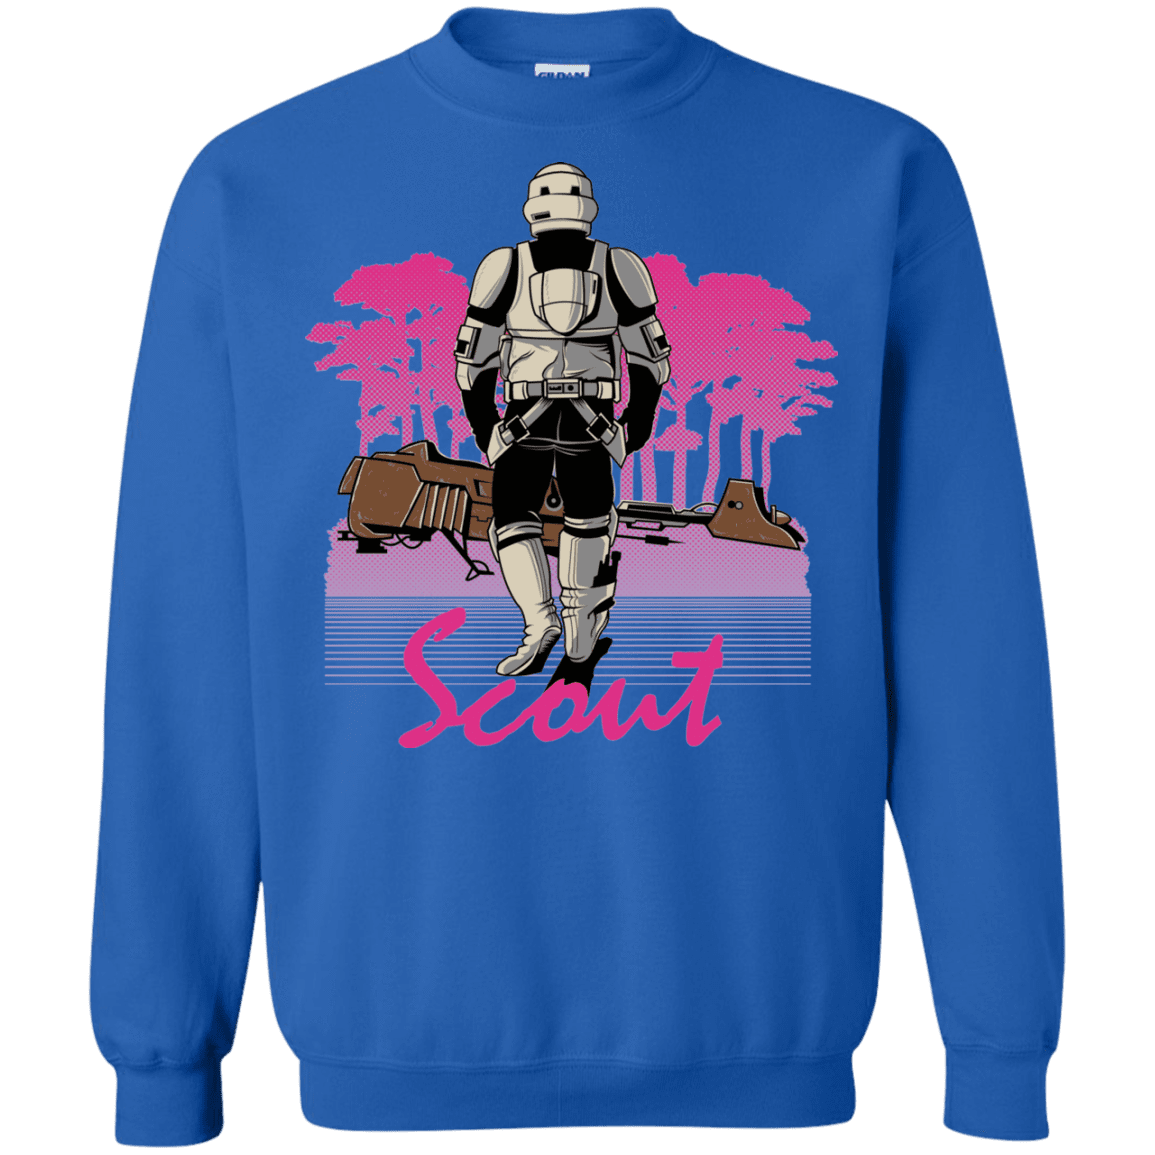 Sweatshirts Royal / Small SCOUT DRIVE Crewneck Sweatshirt